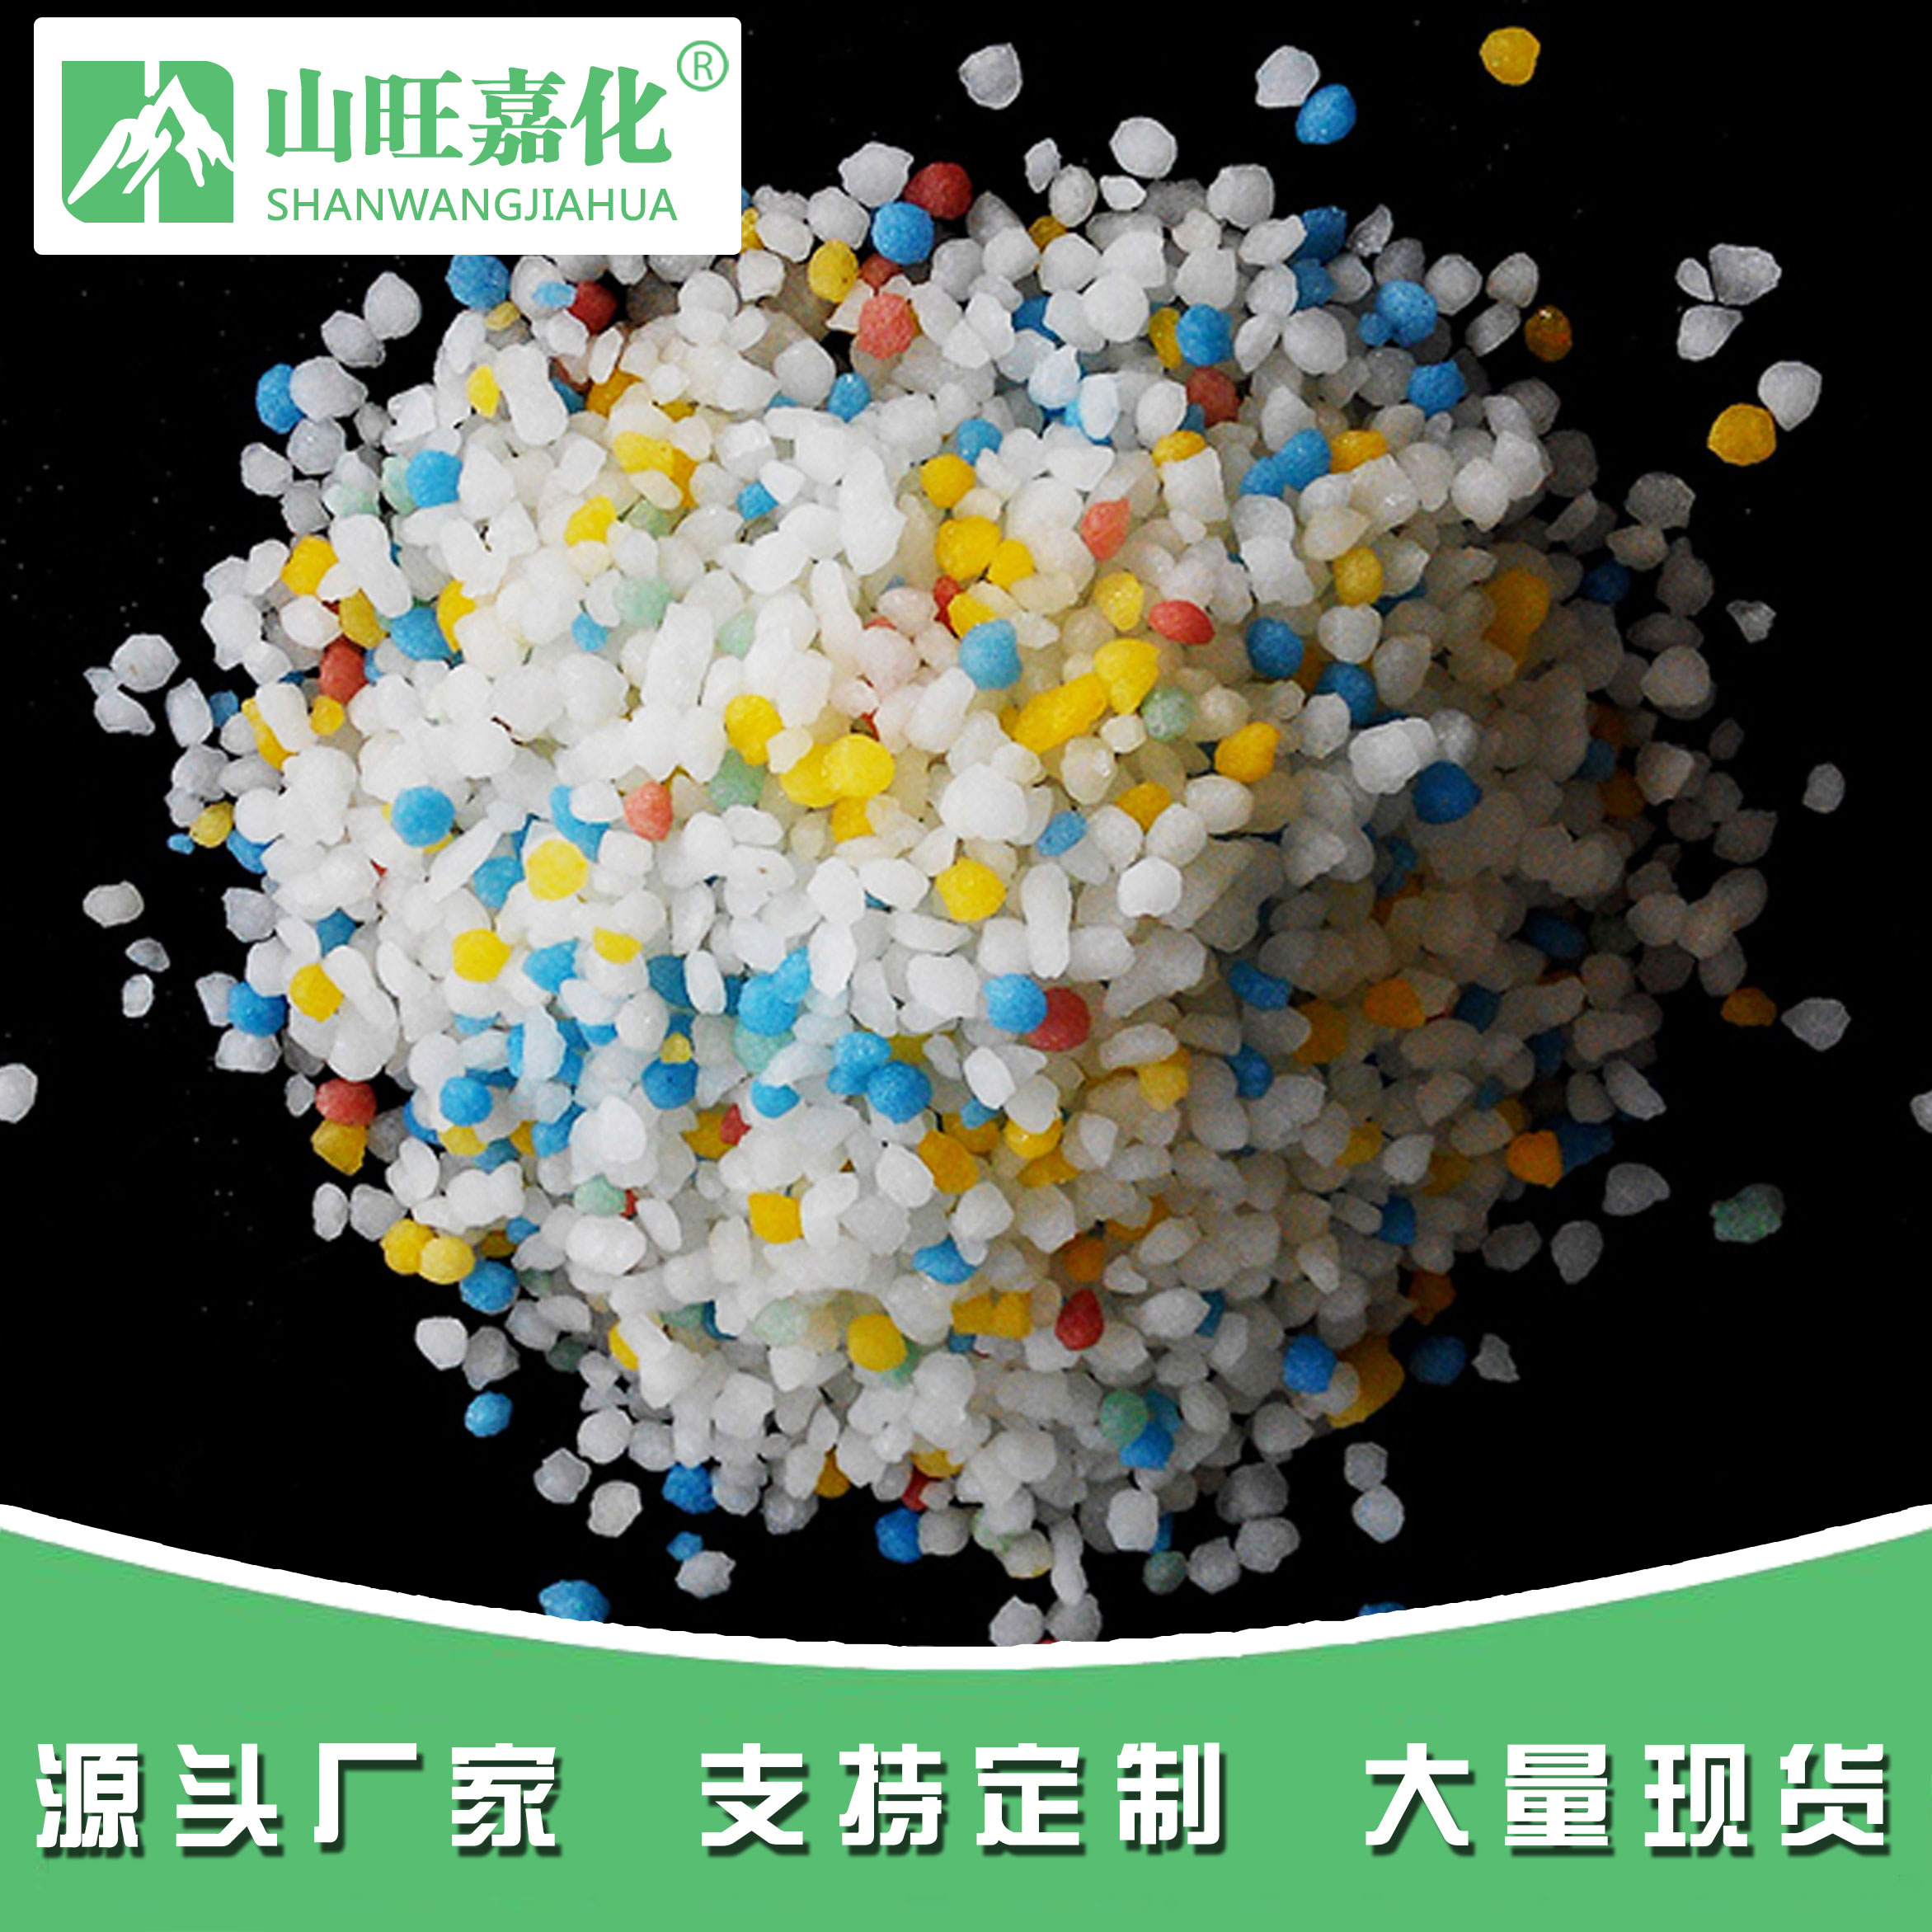 Colored grain magnesium sulfate